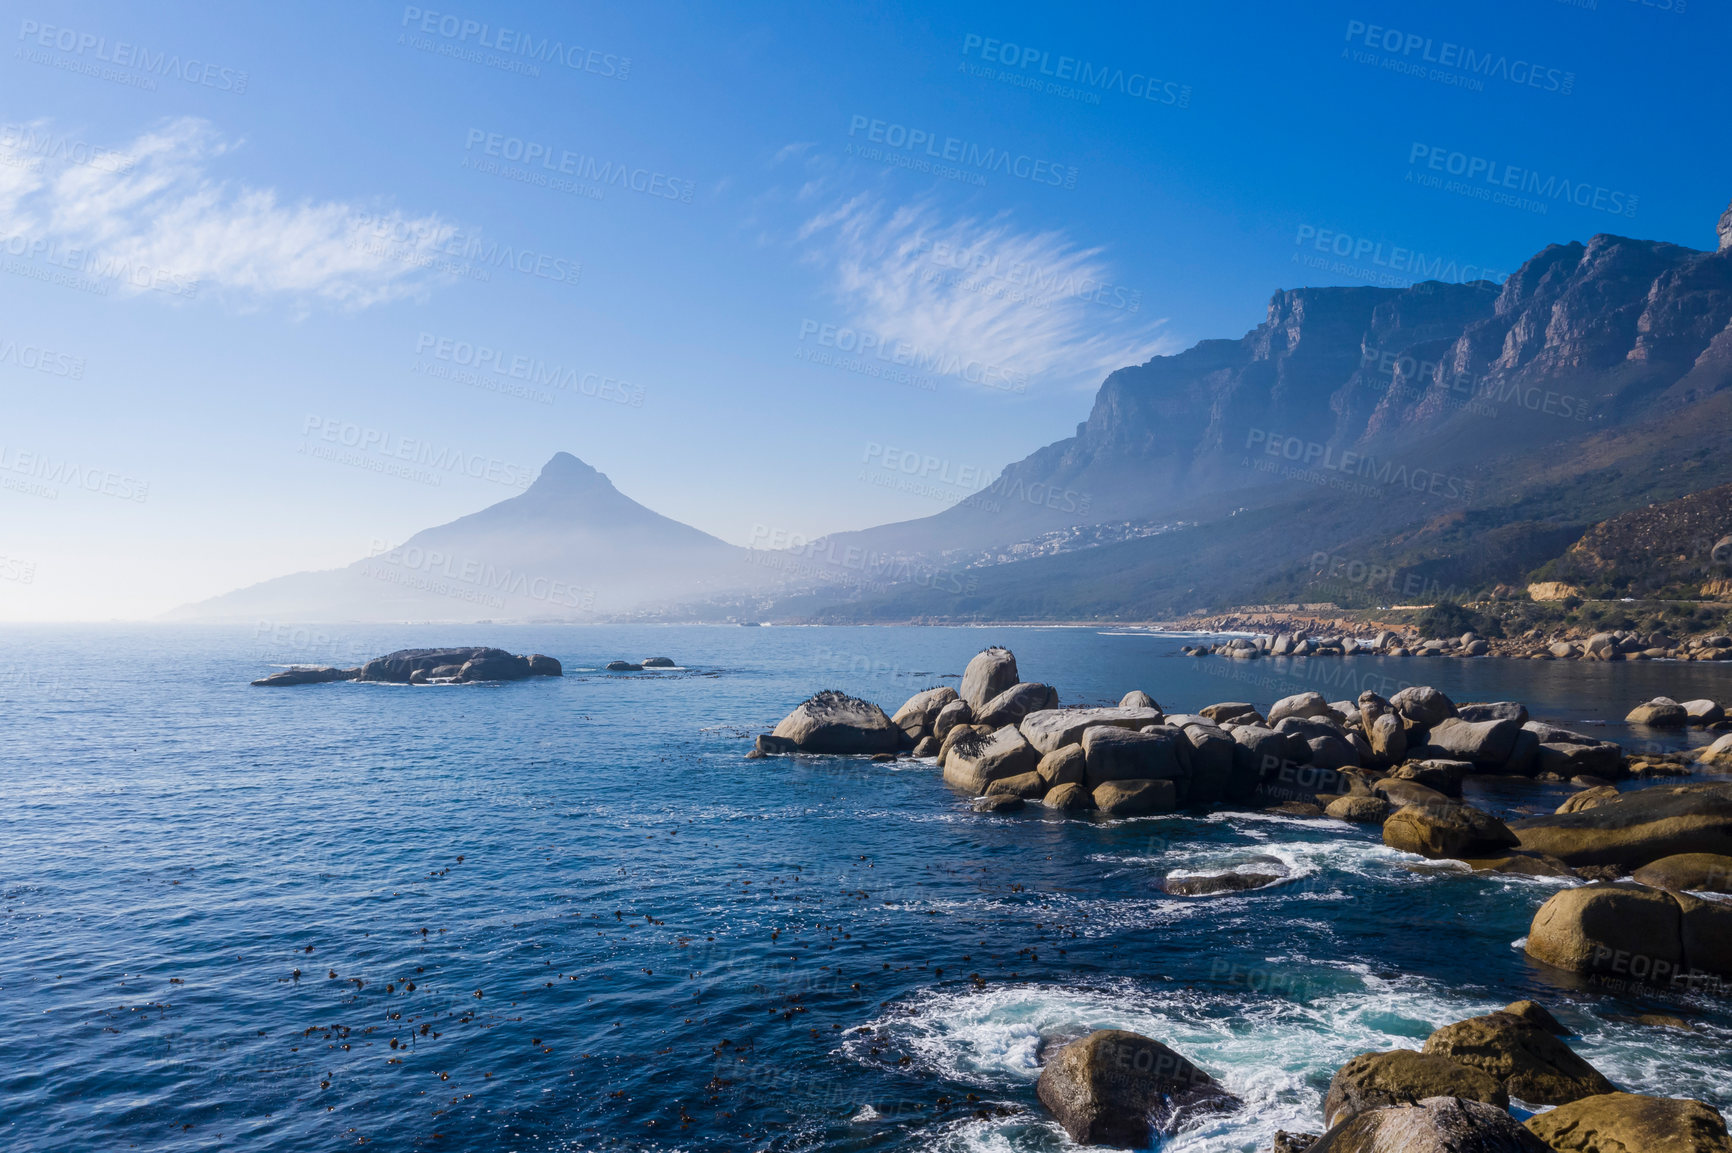 Buy stock photo Shot of a mountainous landscape along the sea